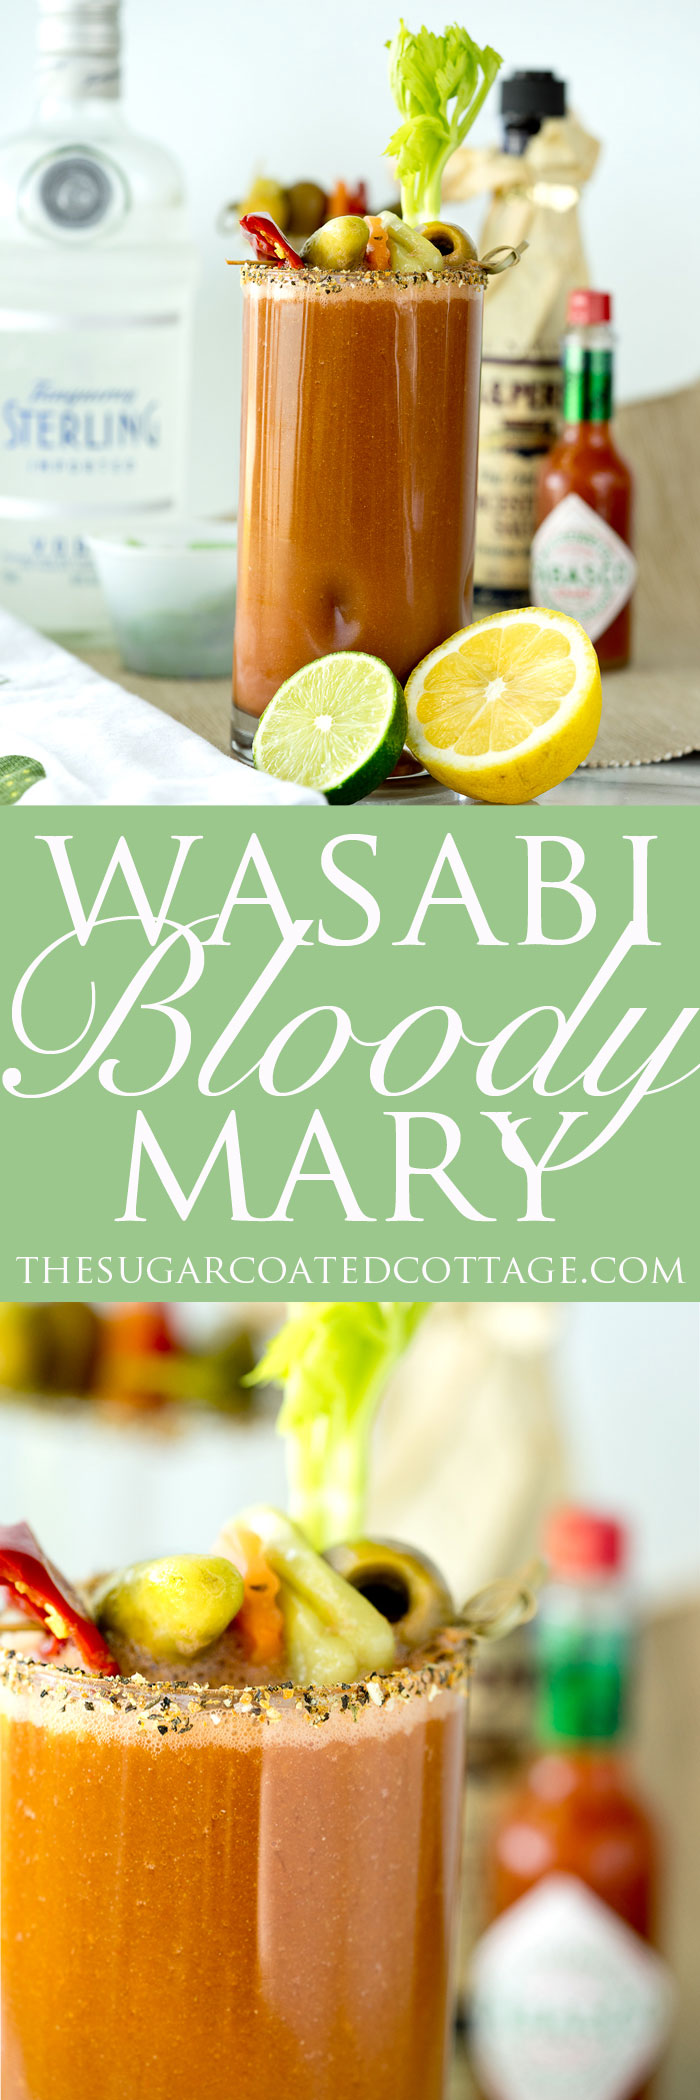 Wasabi Bloody Mary